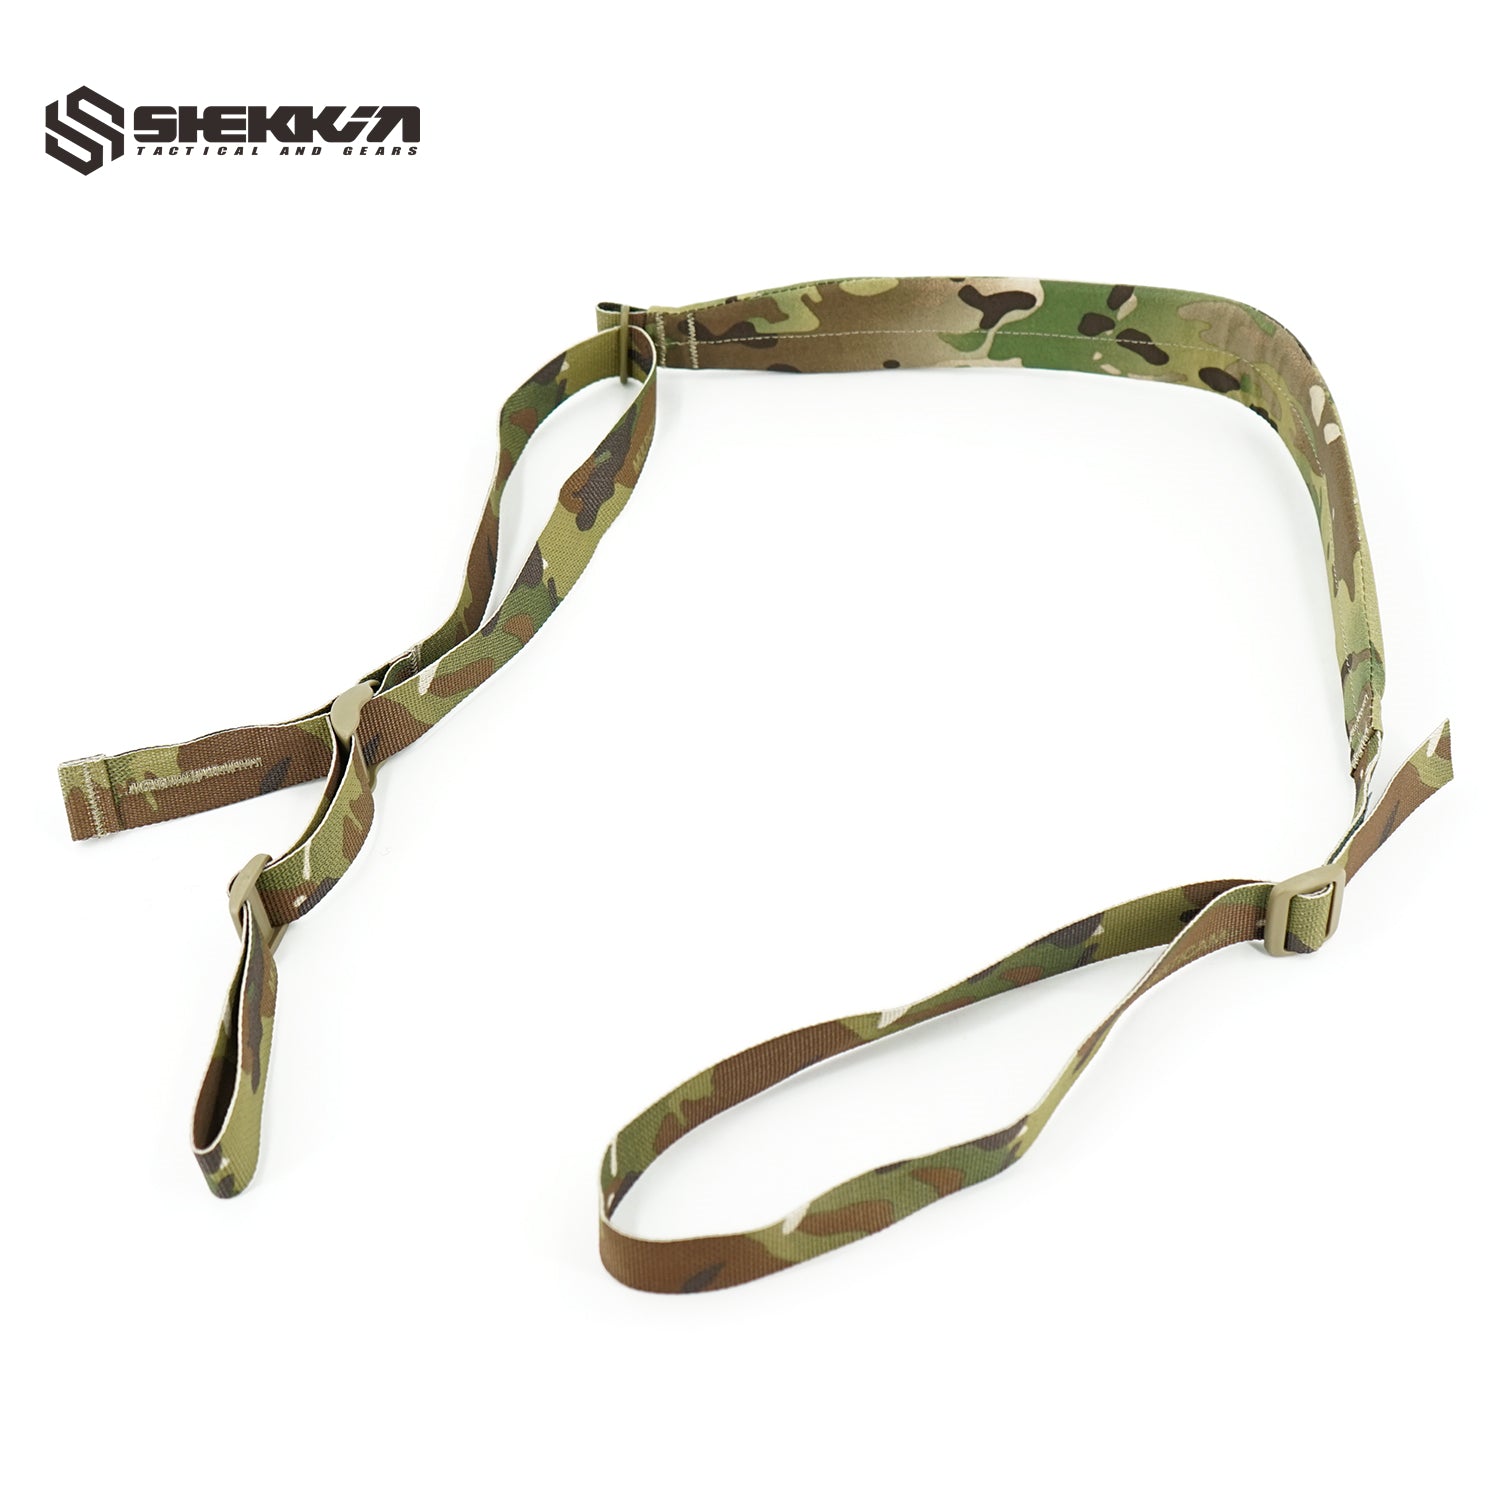 SBS style two point tactical sling - Shekkin Gears